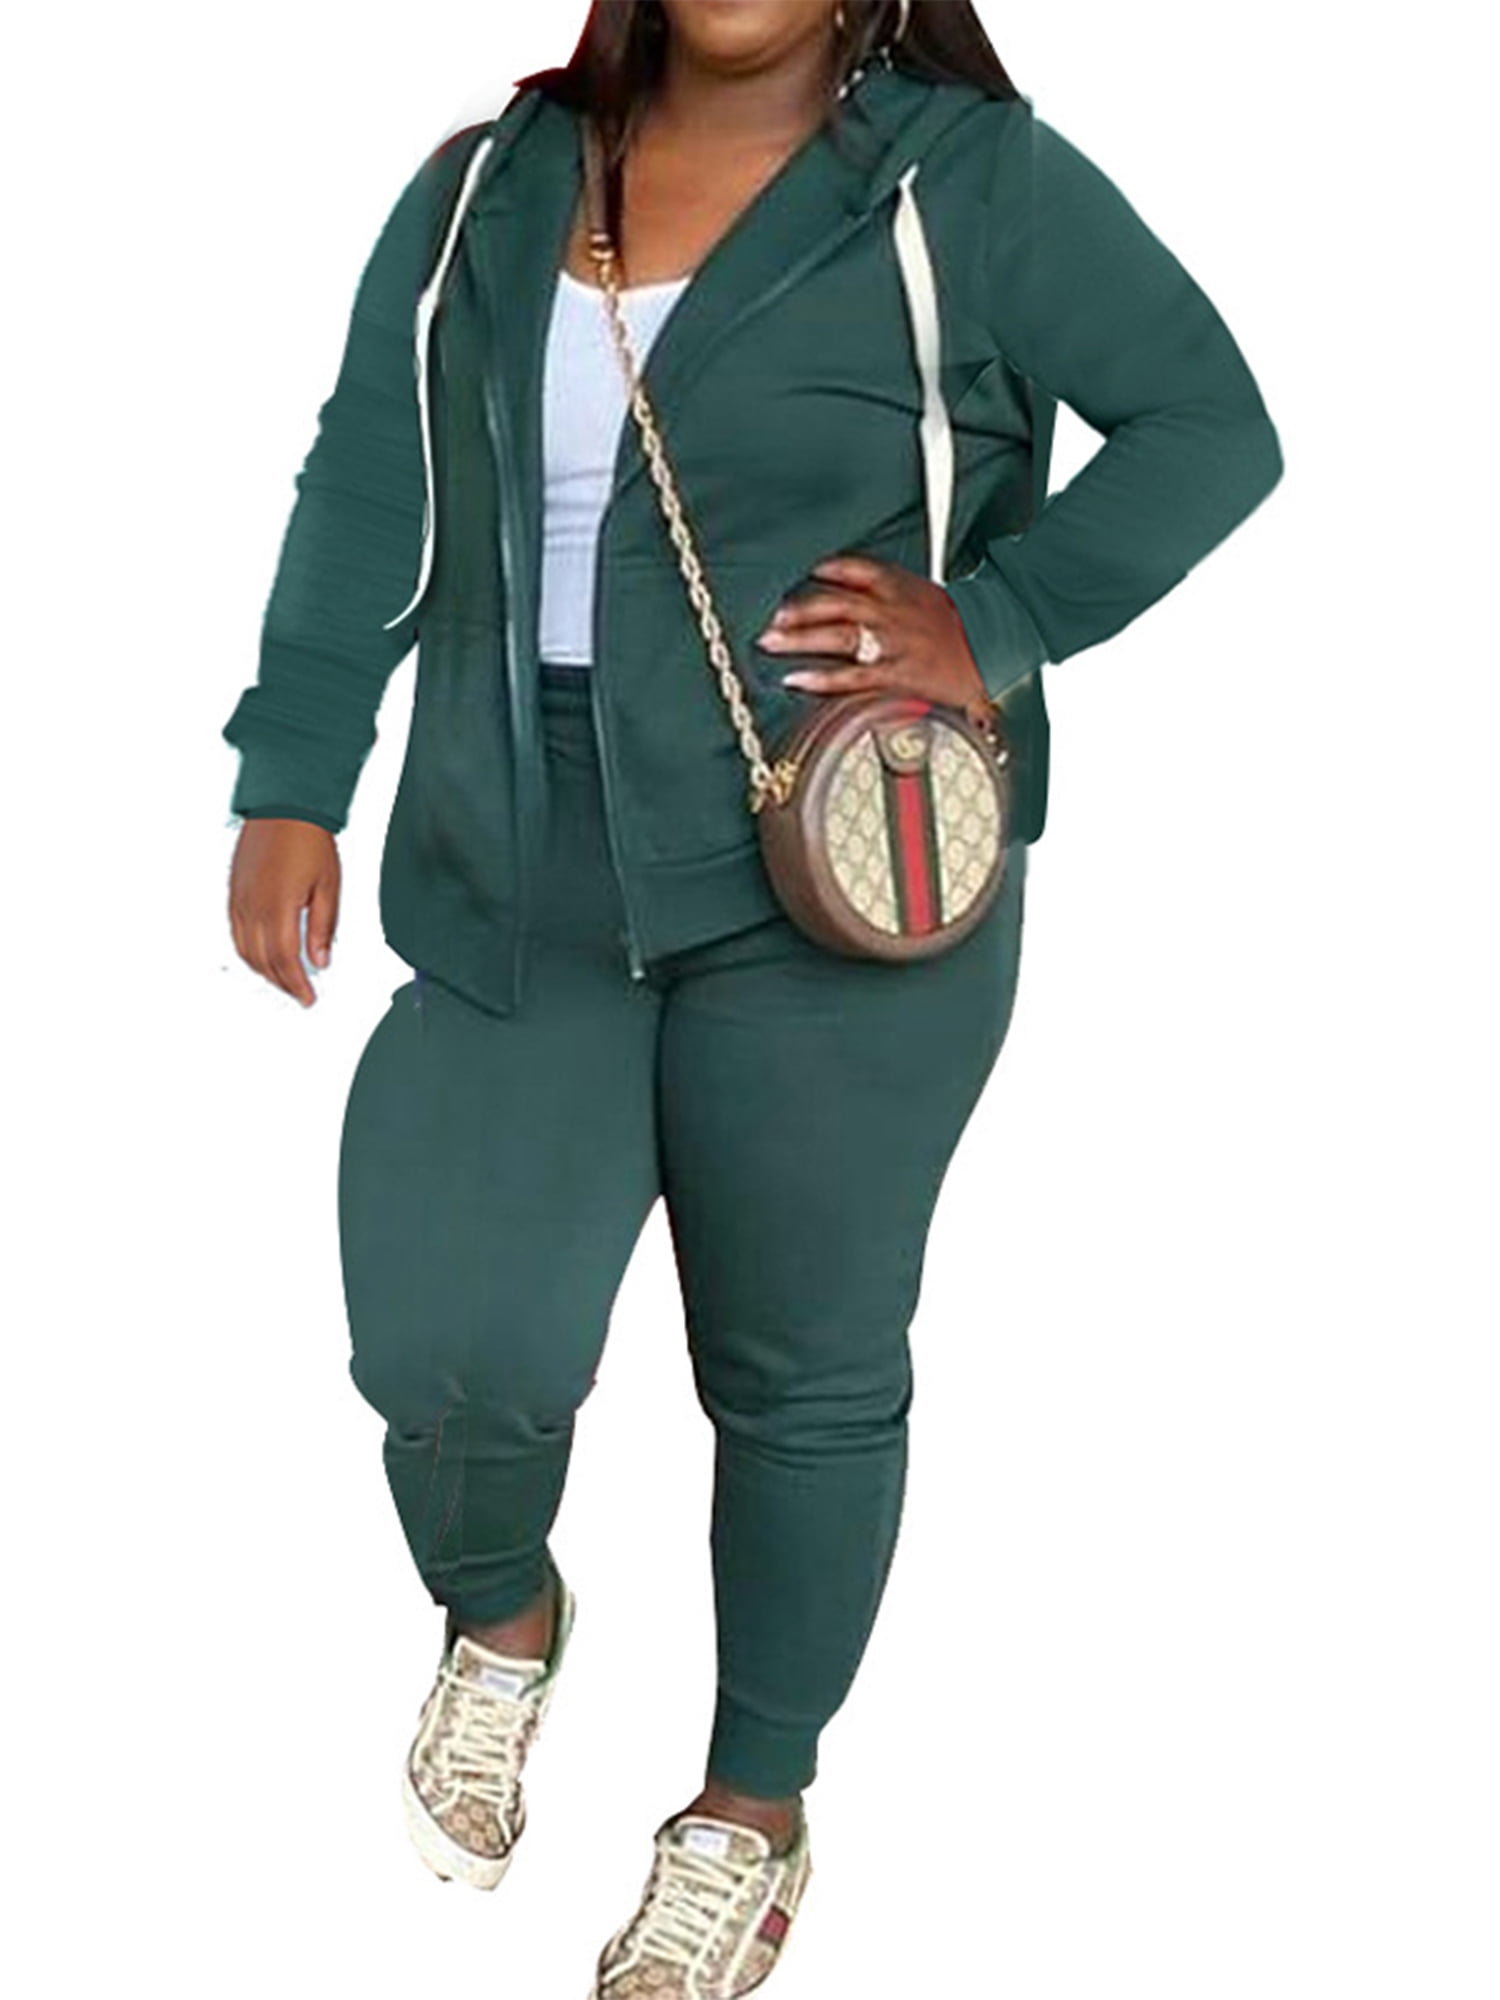 Cindysus Women Two Piece Outfit Plus Size Sweatsuit Hoodie Jogger Set  Casual Jogging Long Sleeve Tracksuit Sets Brown XL